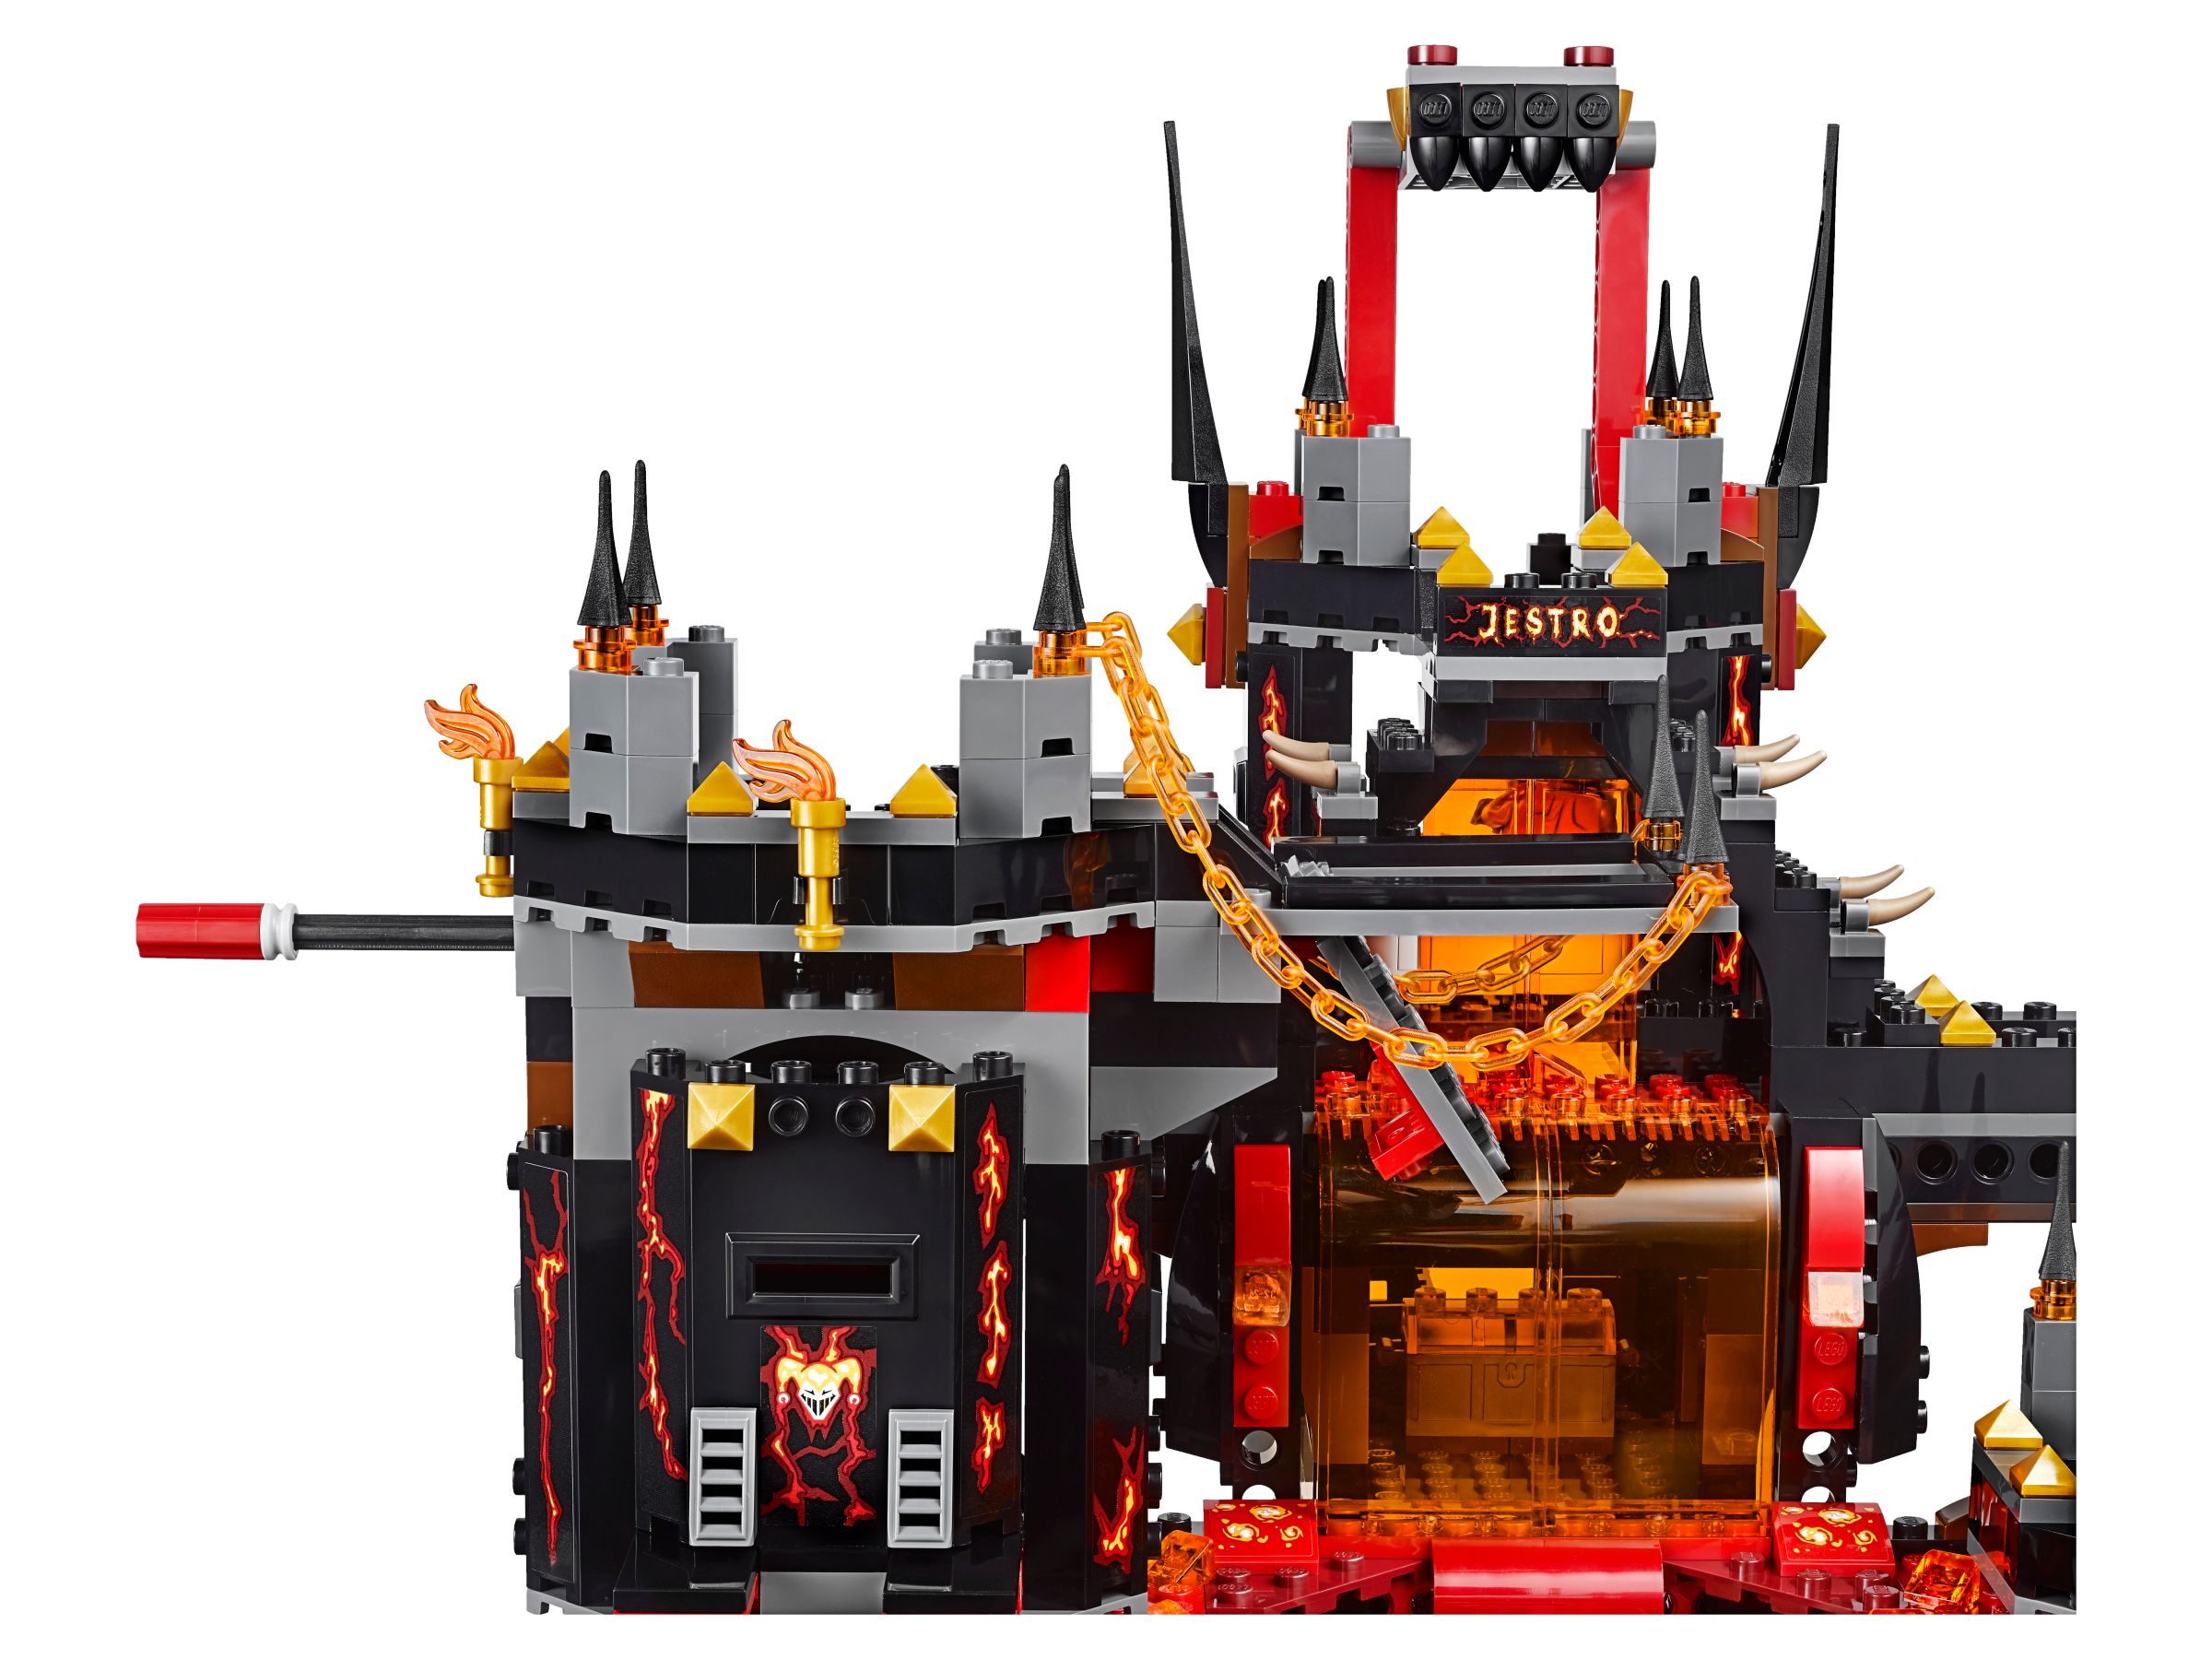 LEGO Nexo Knights 70323 Jestros Vulkanfestung LEGO_70323_alt4.jpg